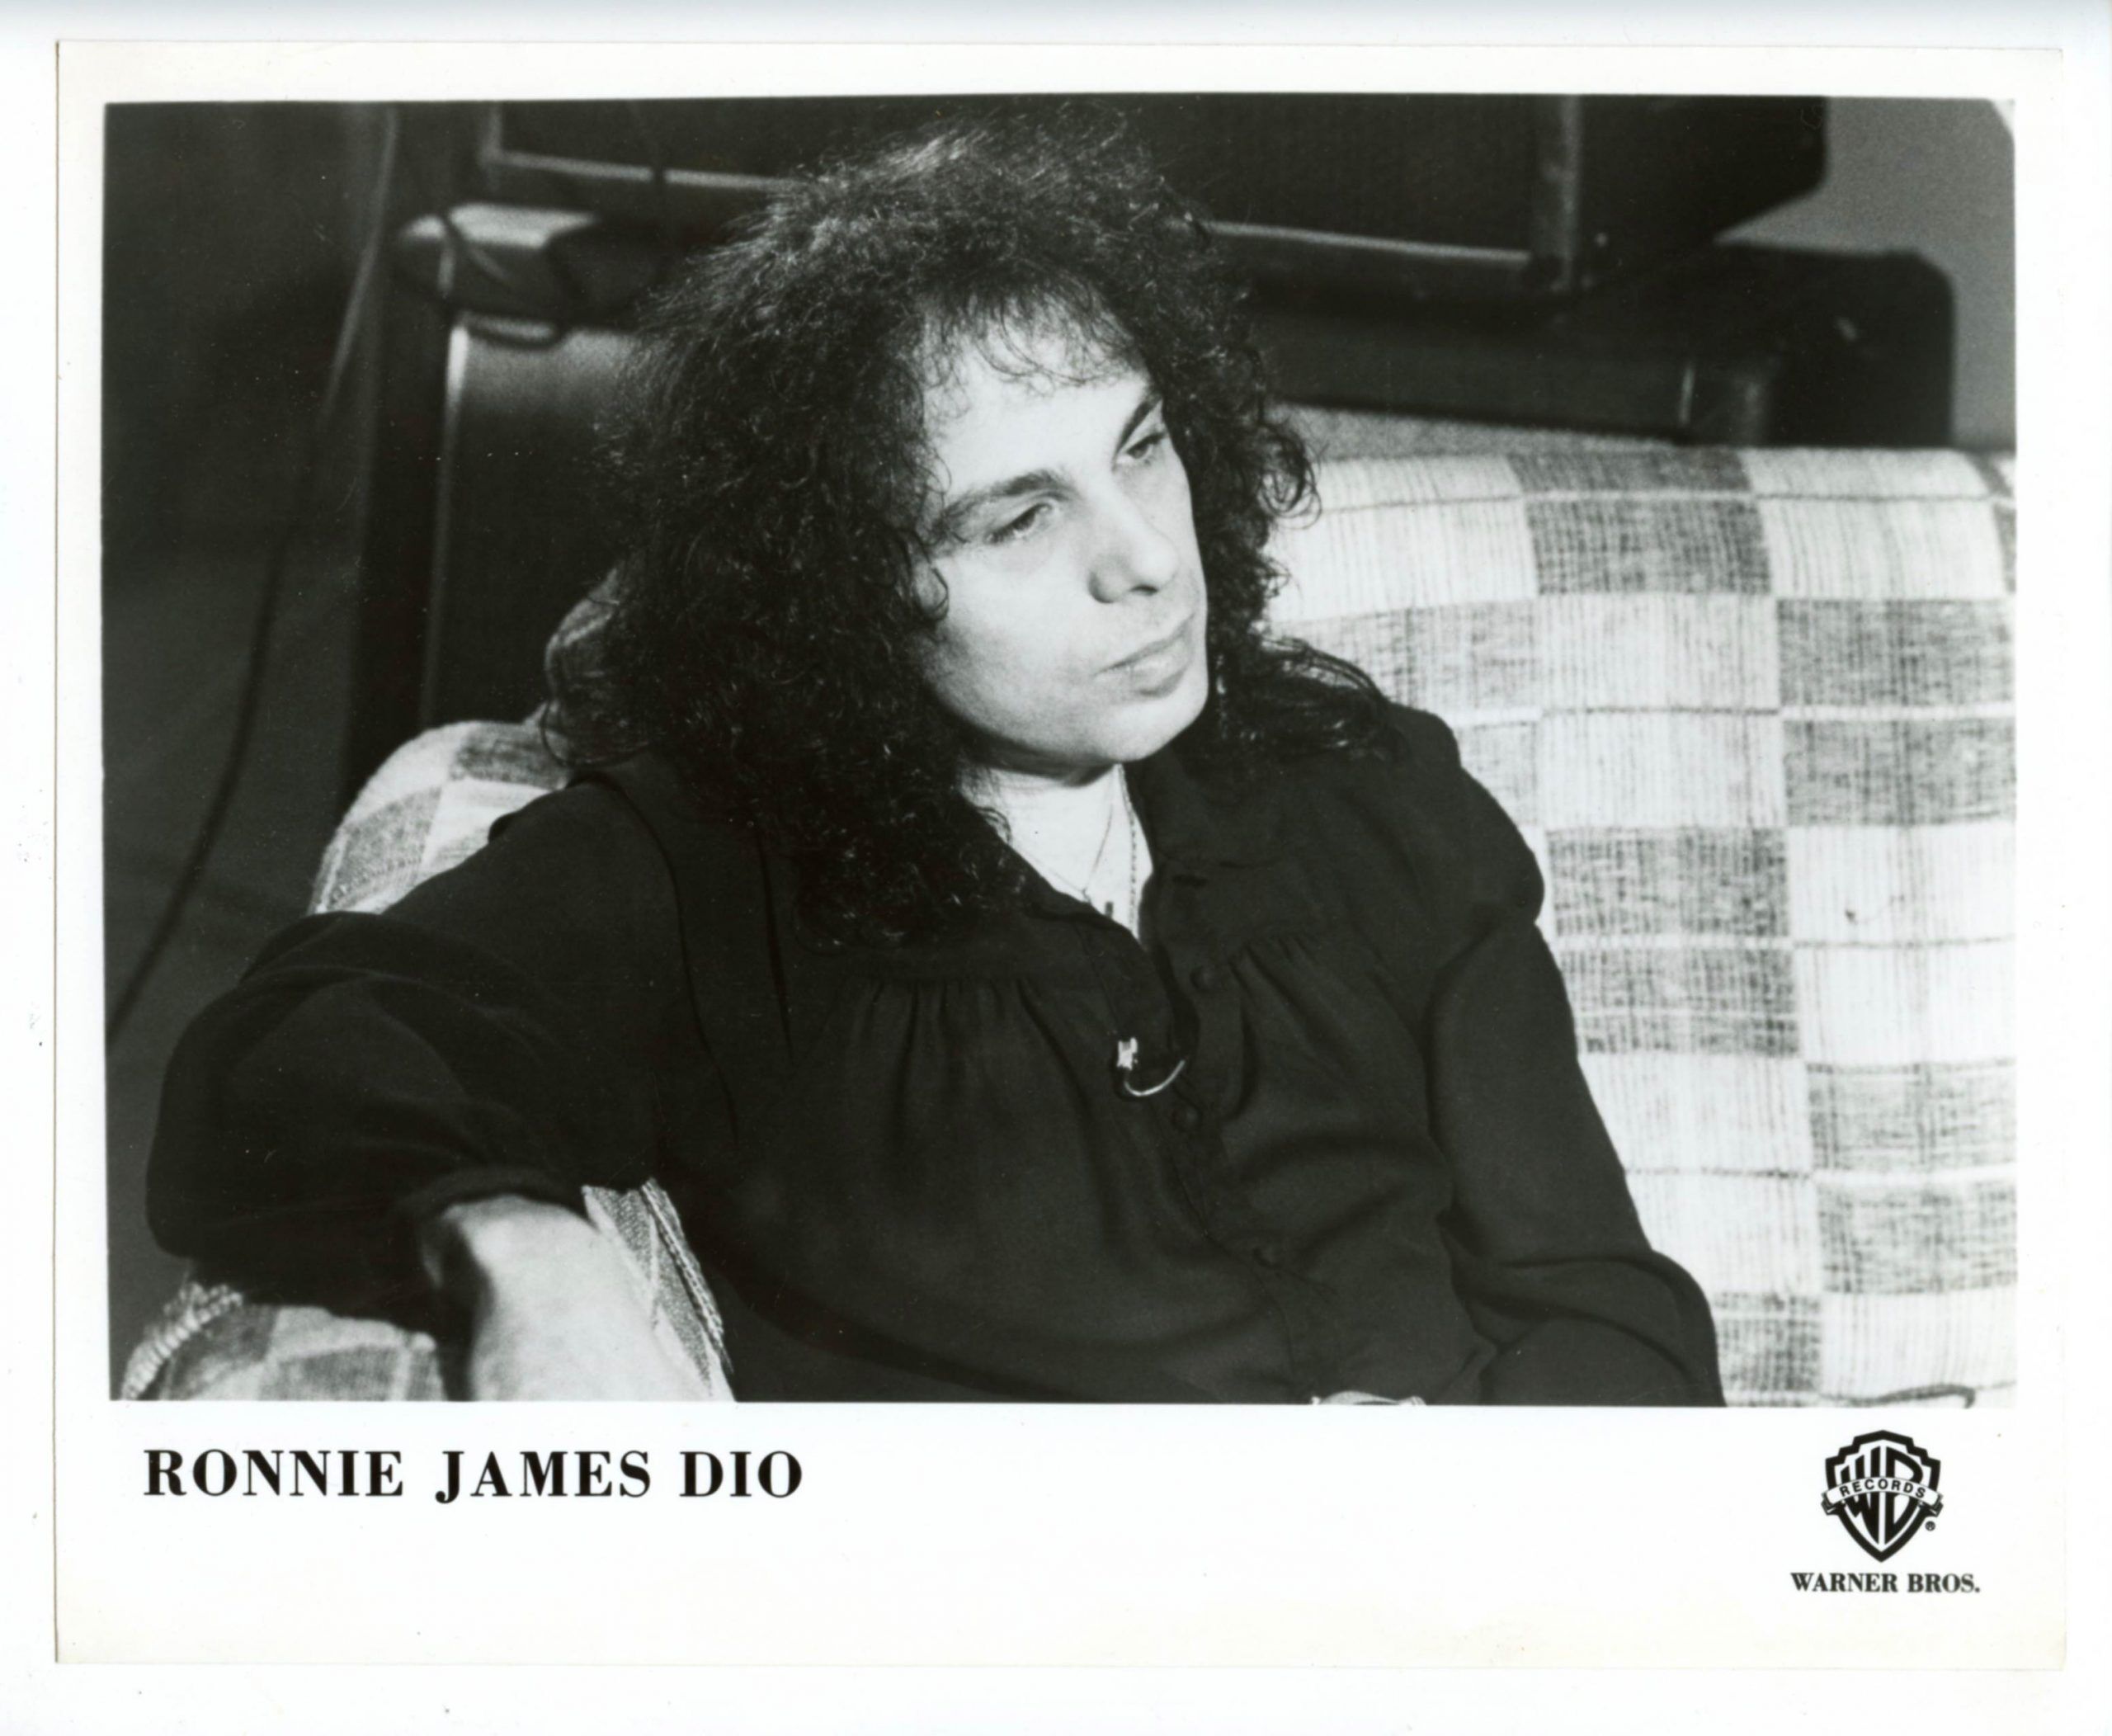 Ronnie James Dio Photo 1980s Warner Bros Records